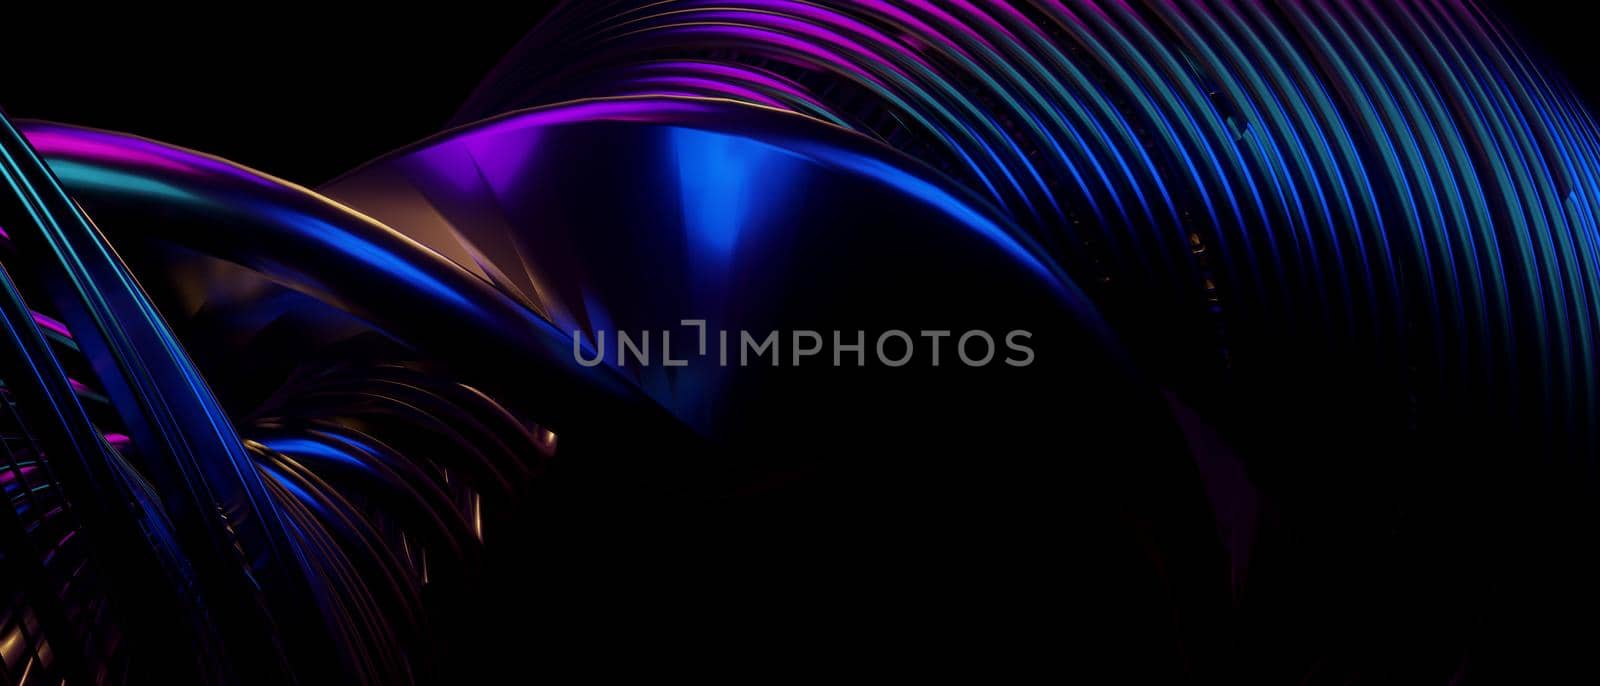 Festive Abstract Design Neon Irridescent PurpleBlue Background 3D Illustration